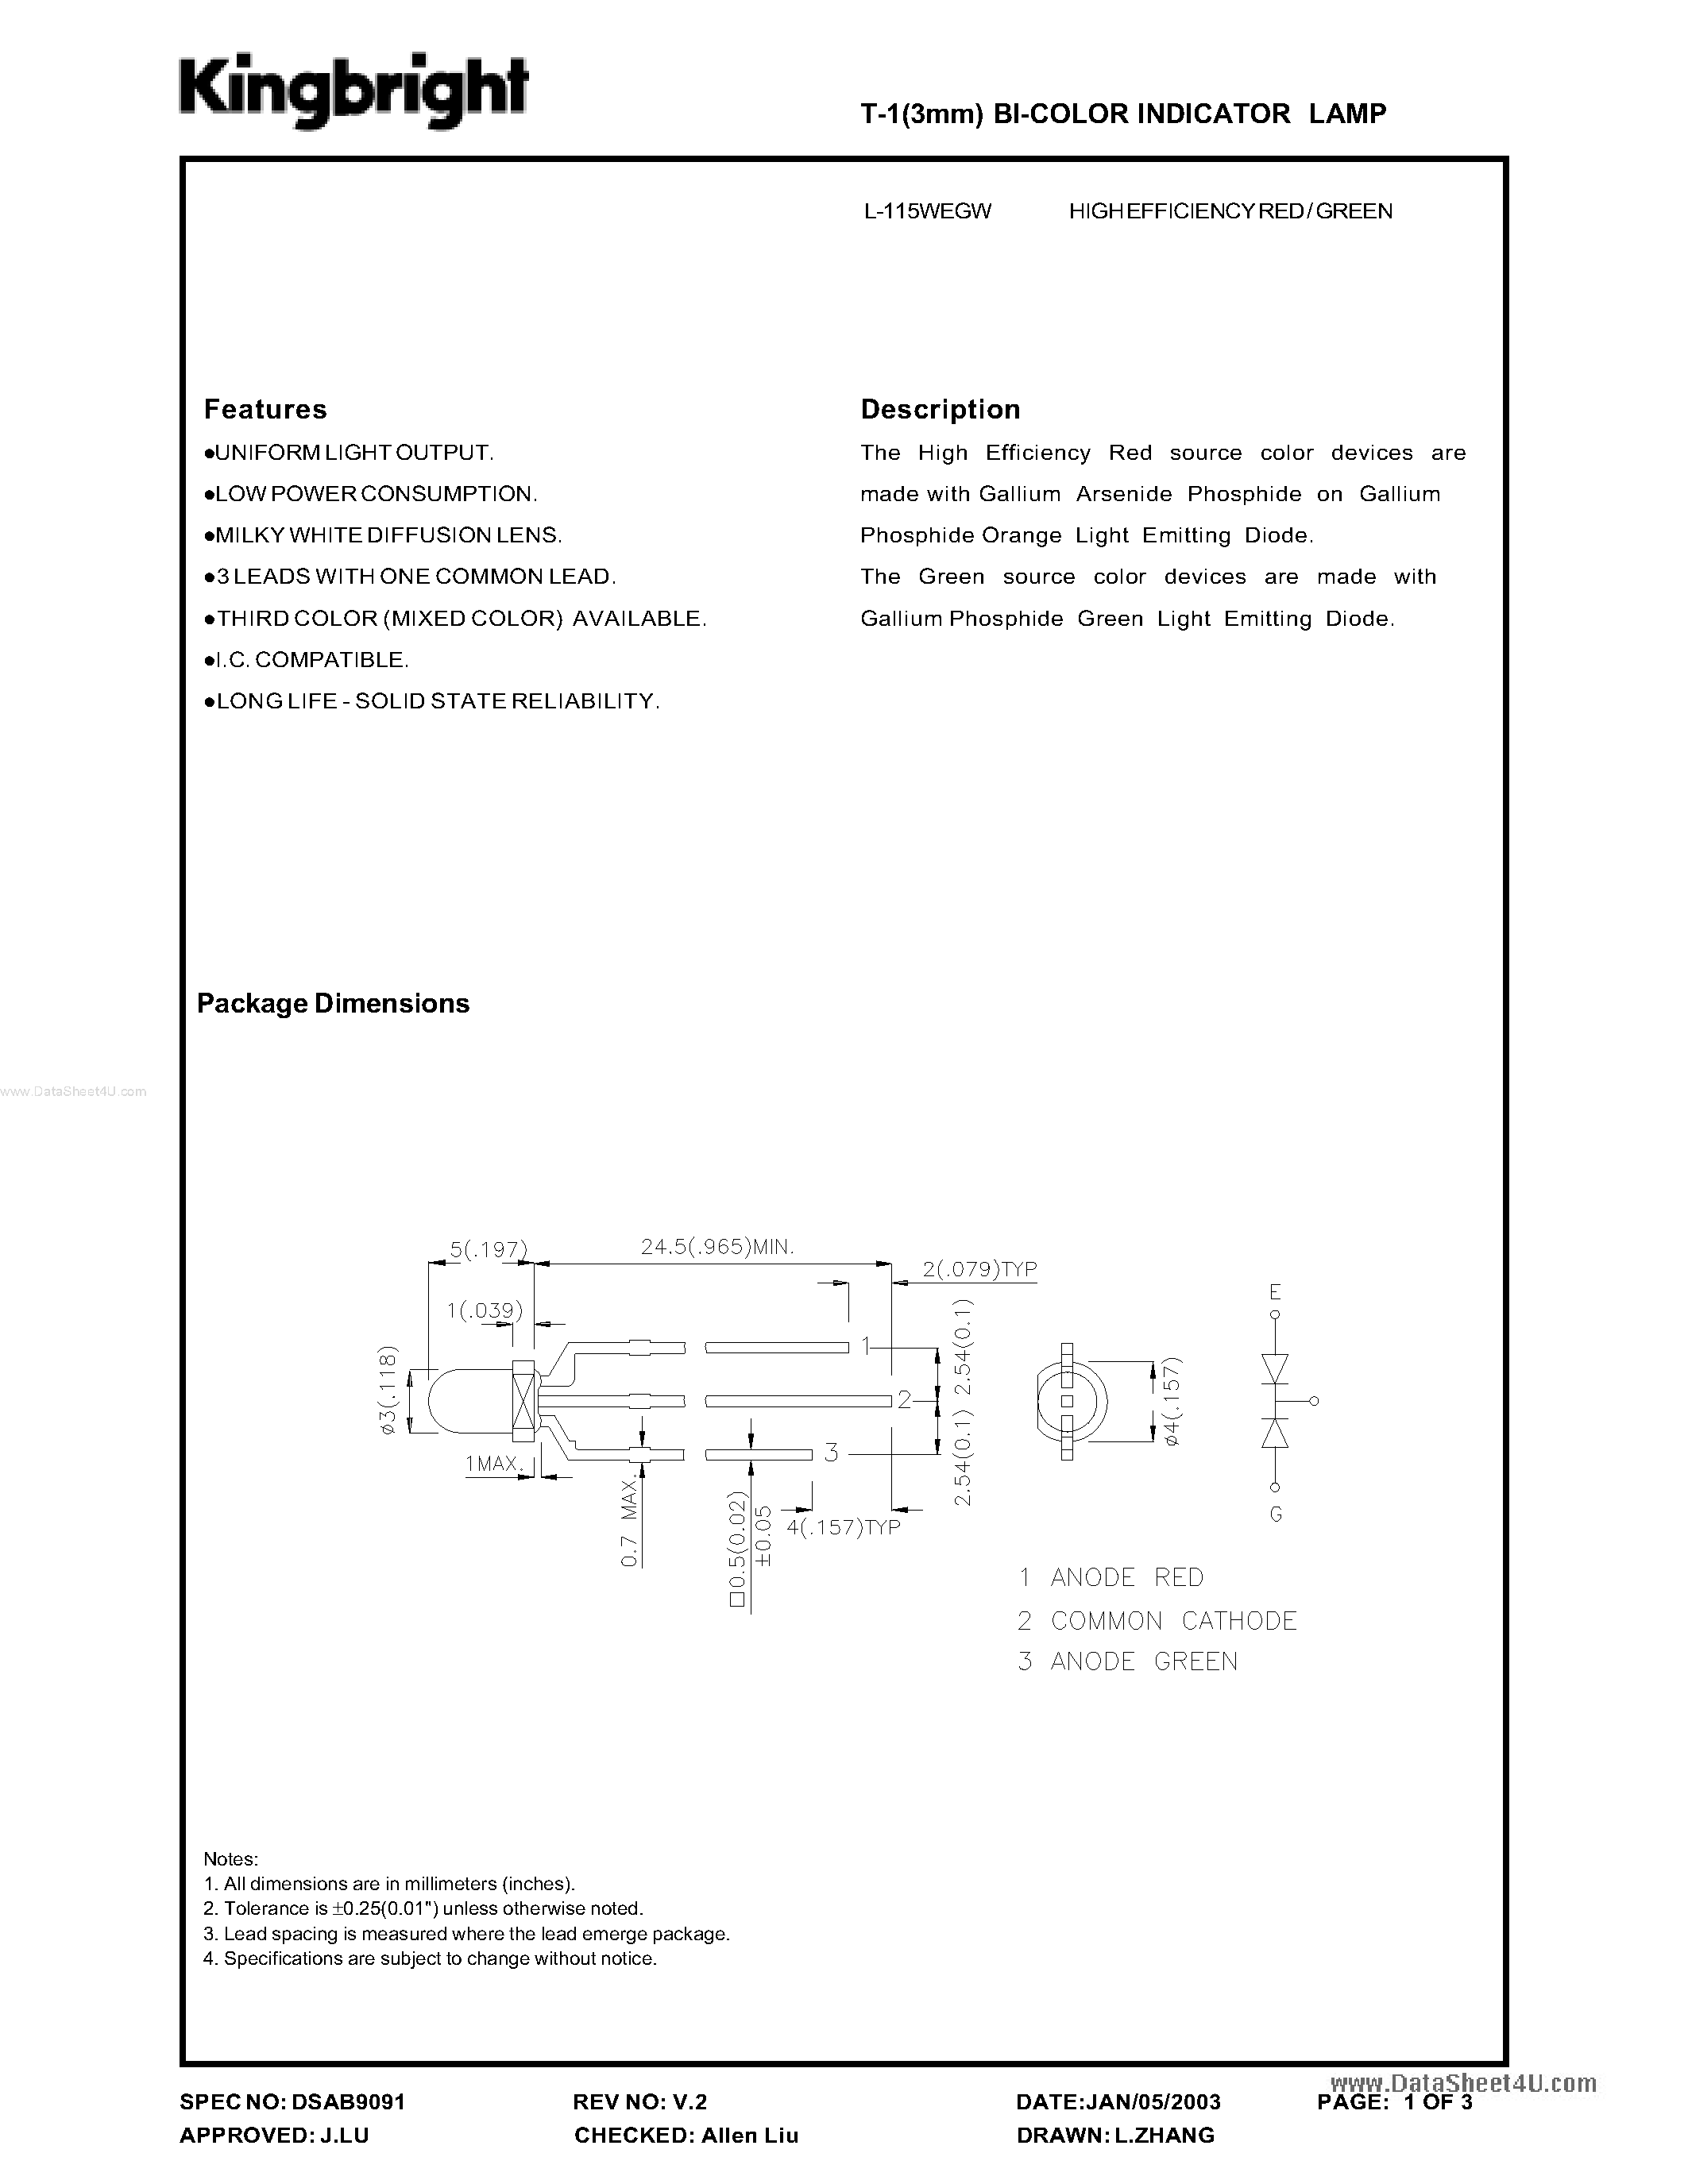 Datasheet L-115WEGW - BI-COLOR INDICATOR LAMP page 1